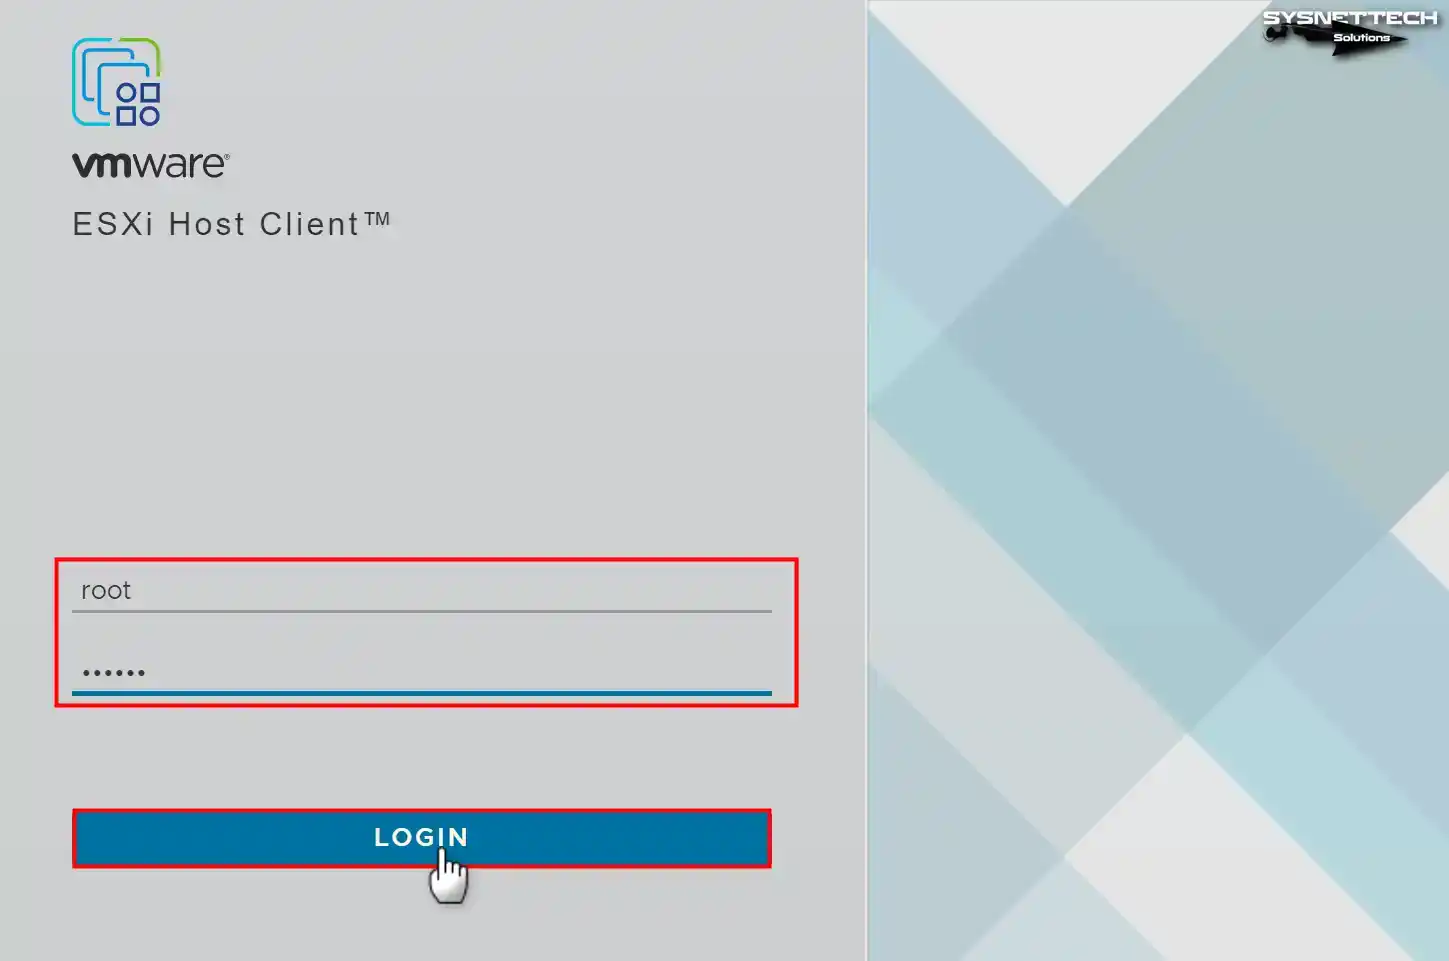 Login to VMware ESXi Host Client